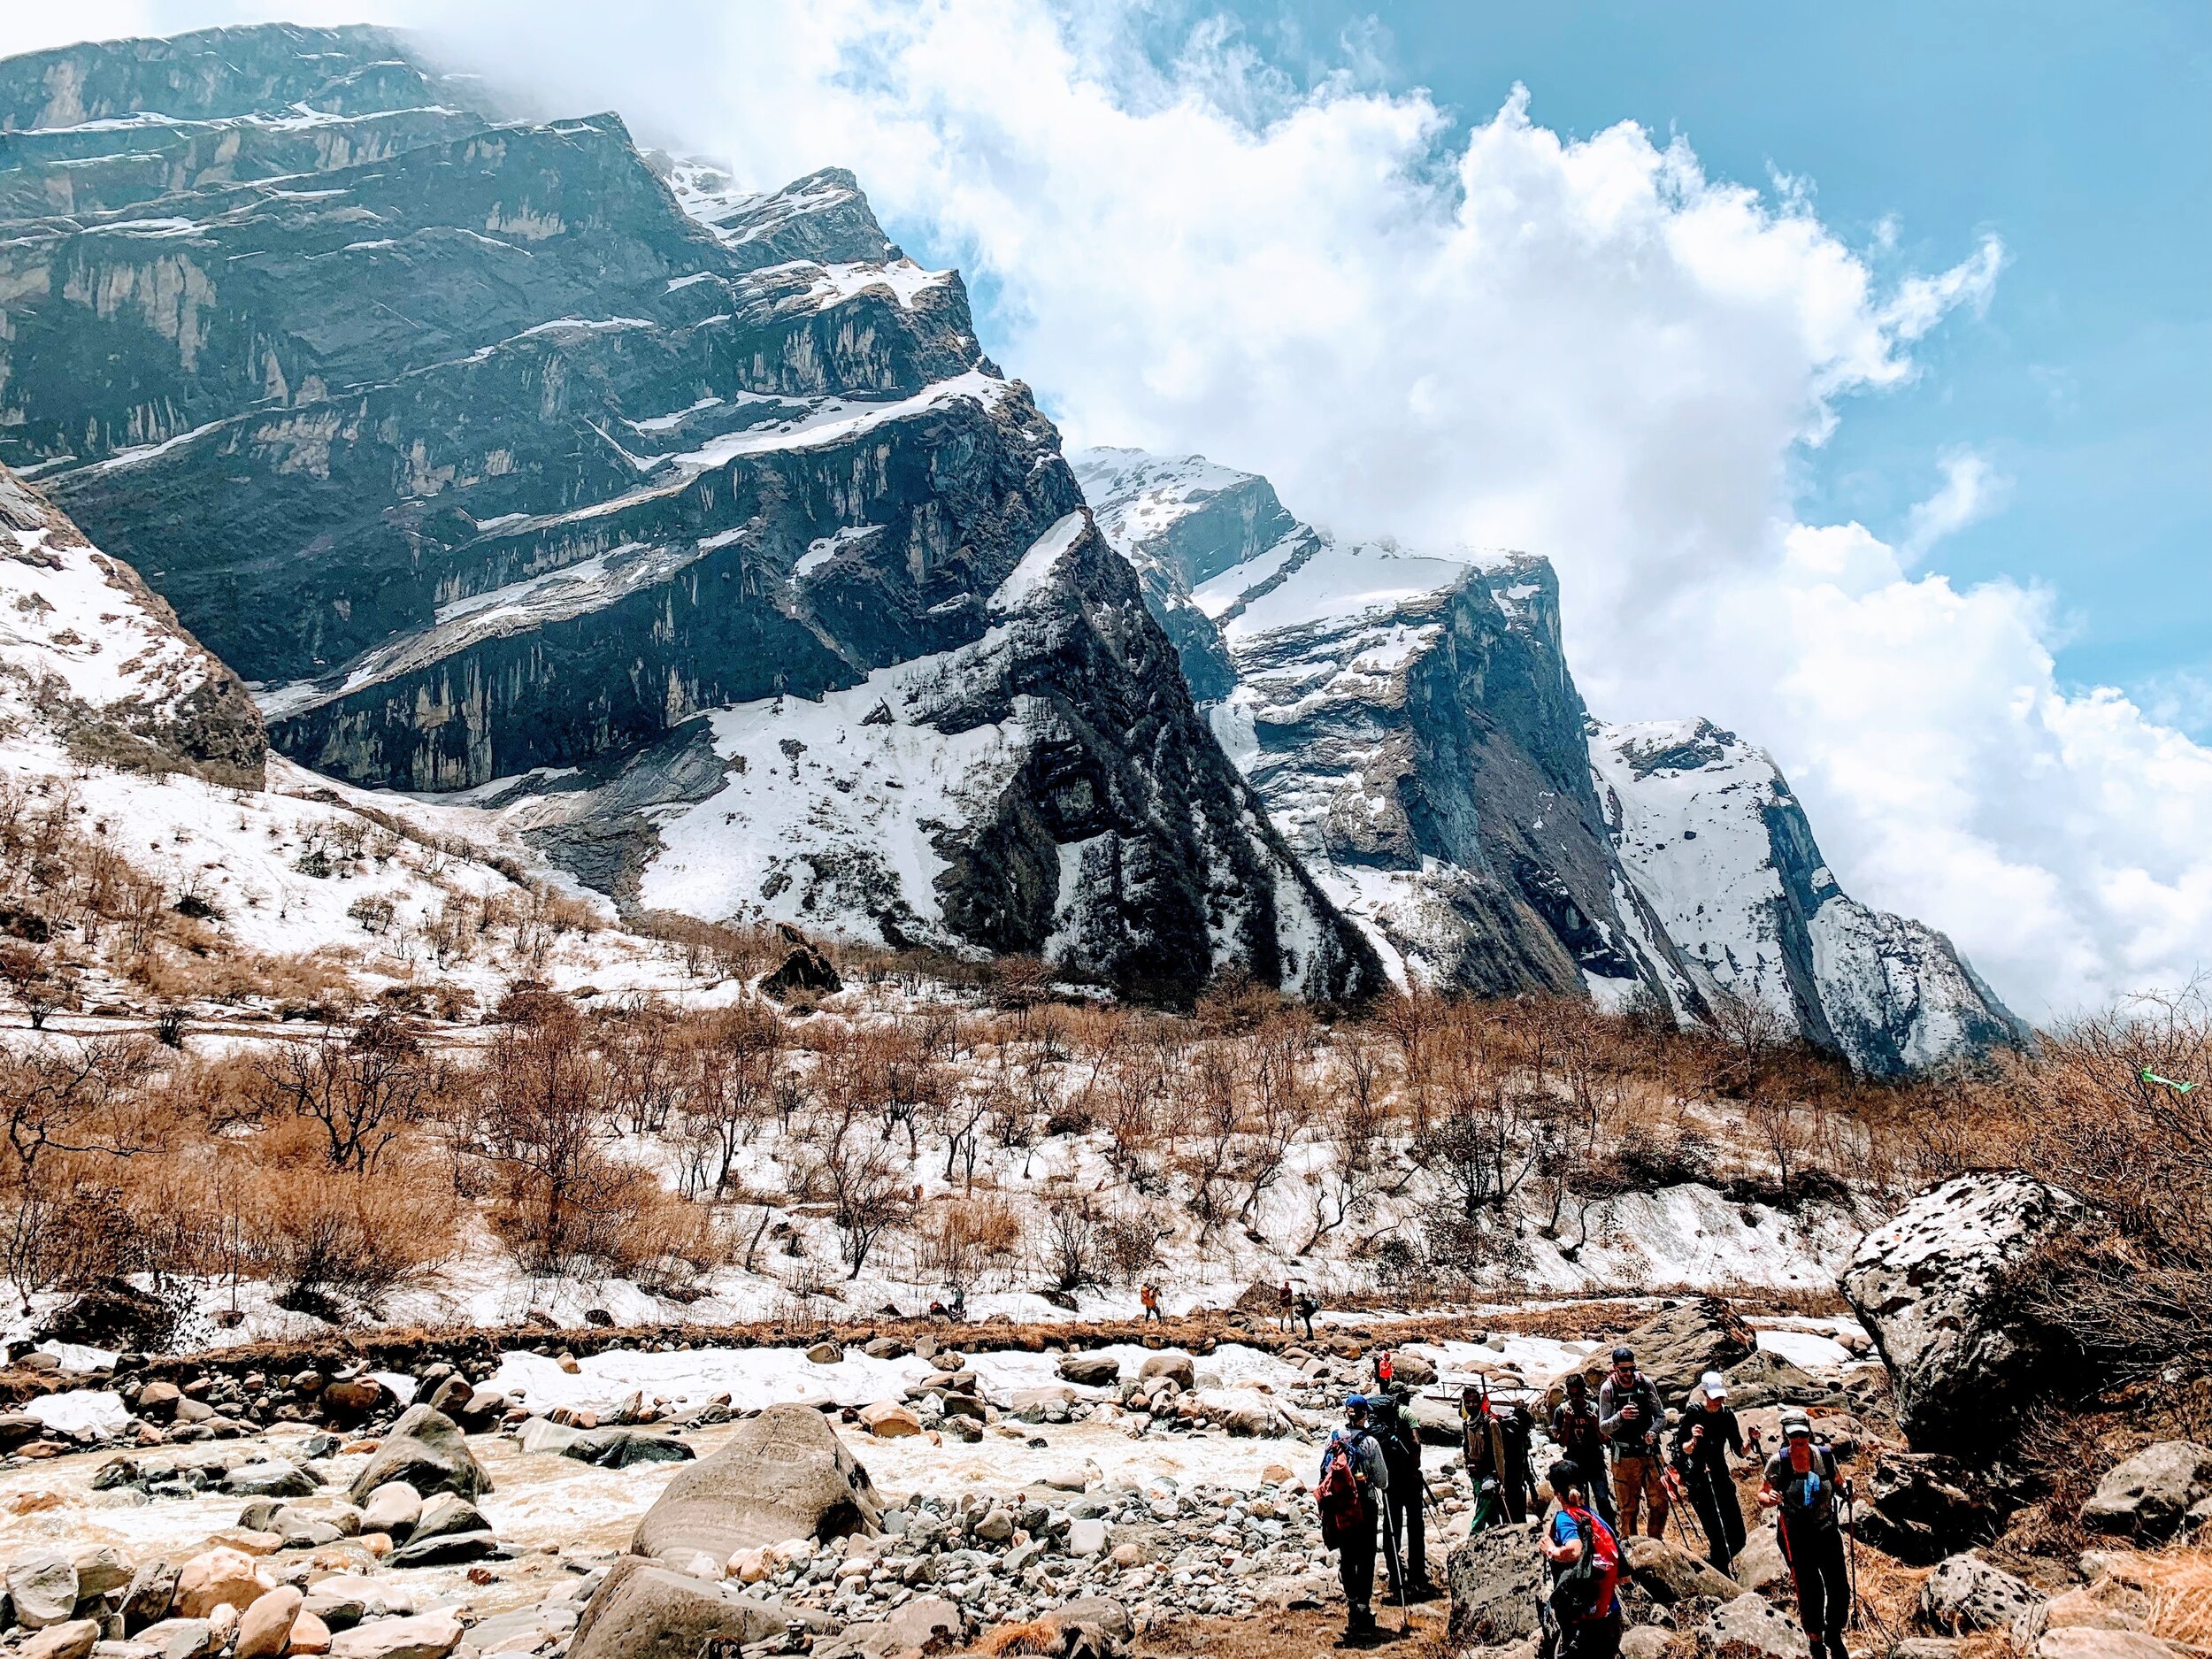  Trekking at Ghandruk, Nepal 